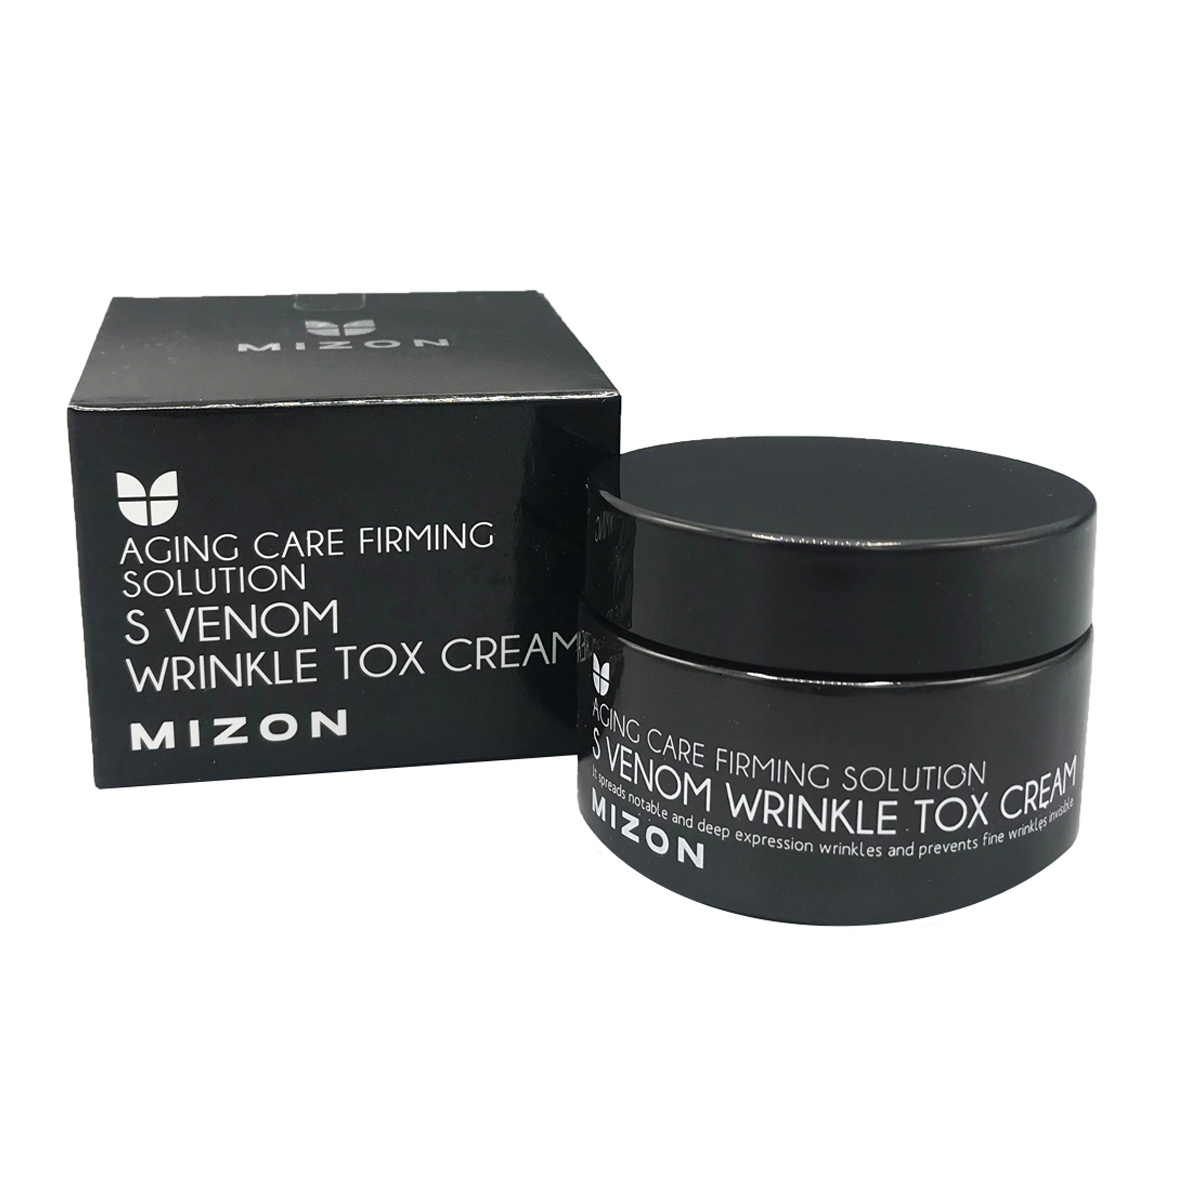 S venin wrinkle tox cream mizon - Mizon, S-Venom Wrinkle Tox Cream, 50 ml » Herb